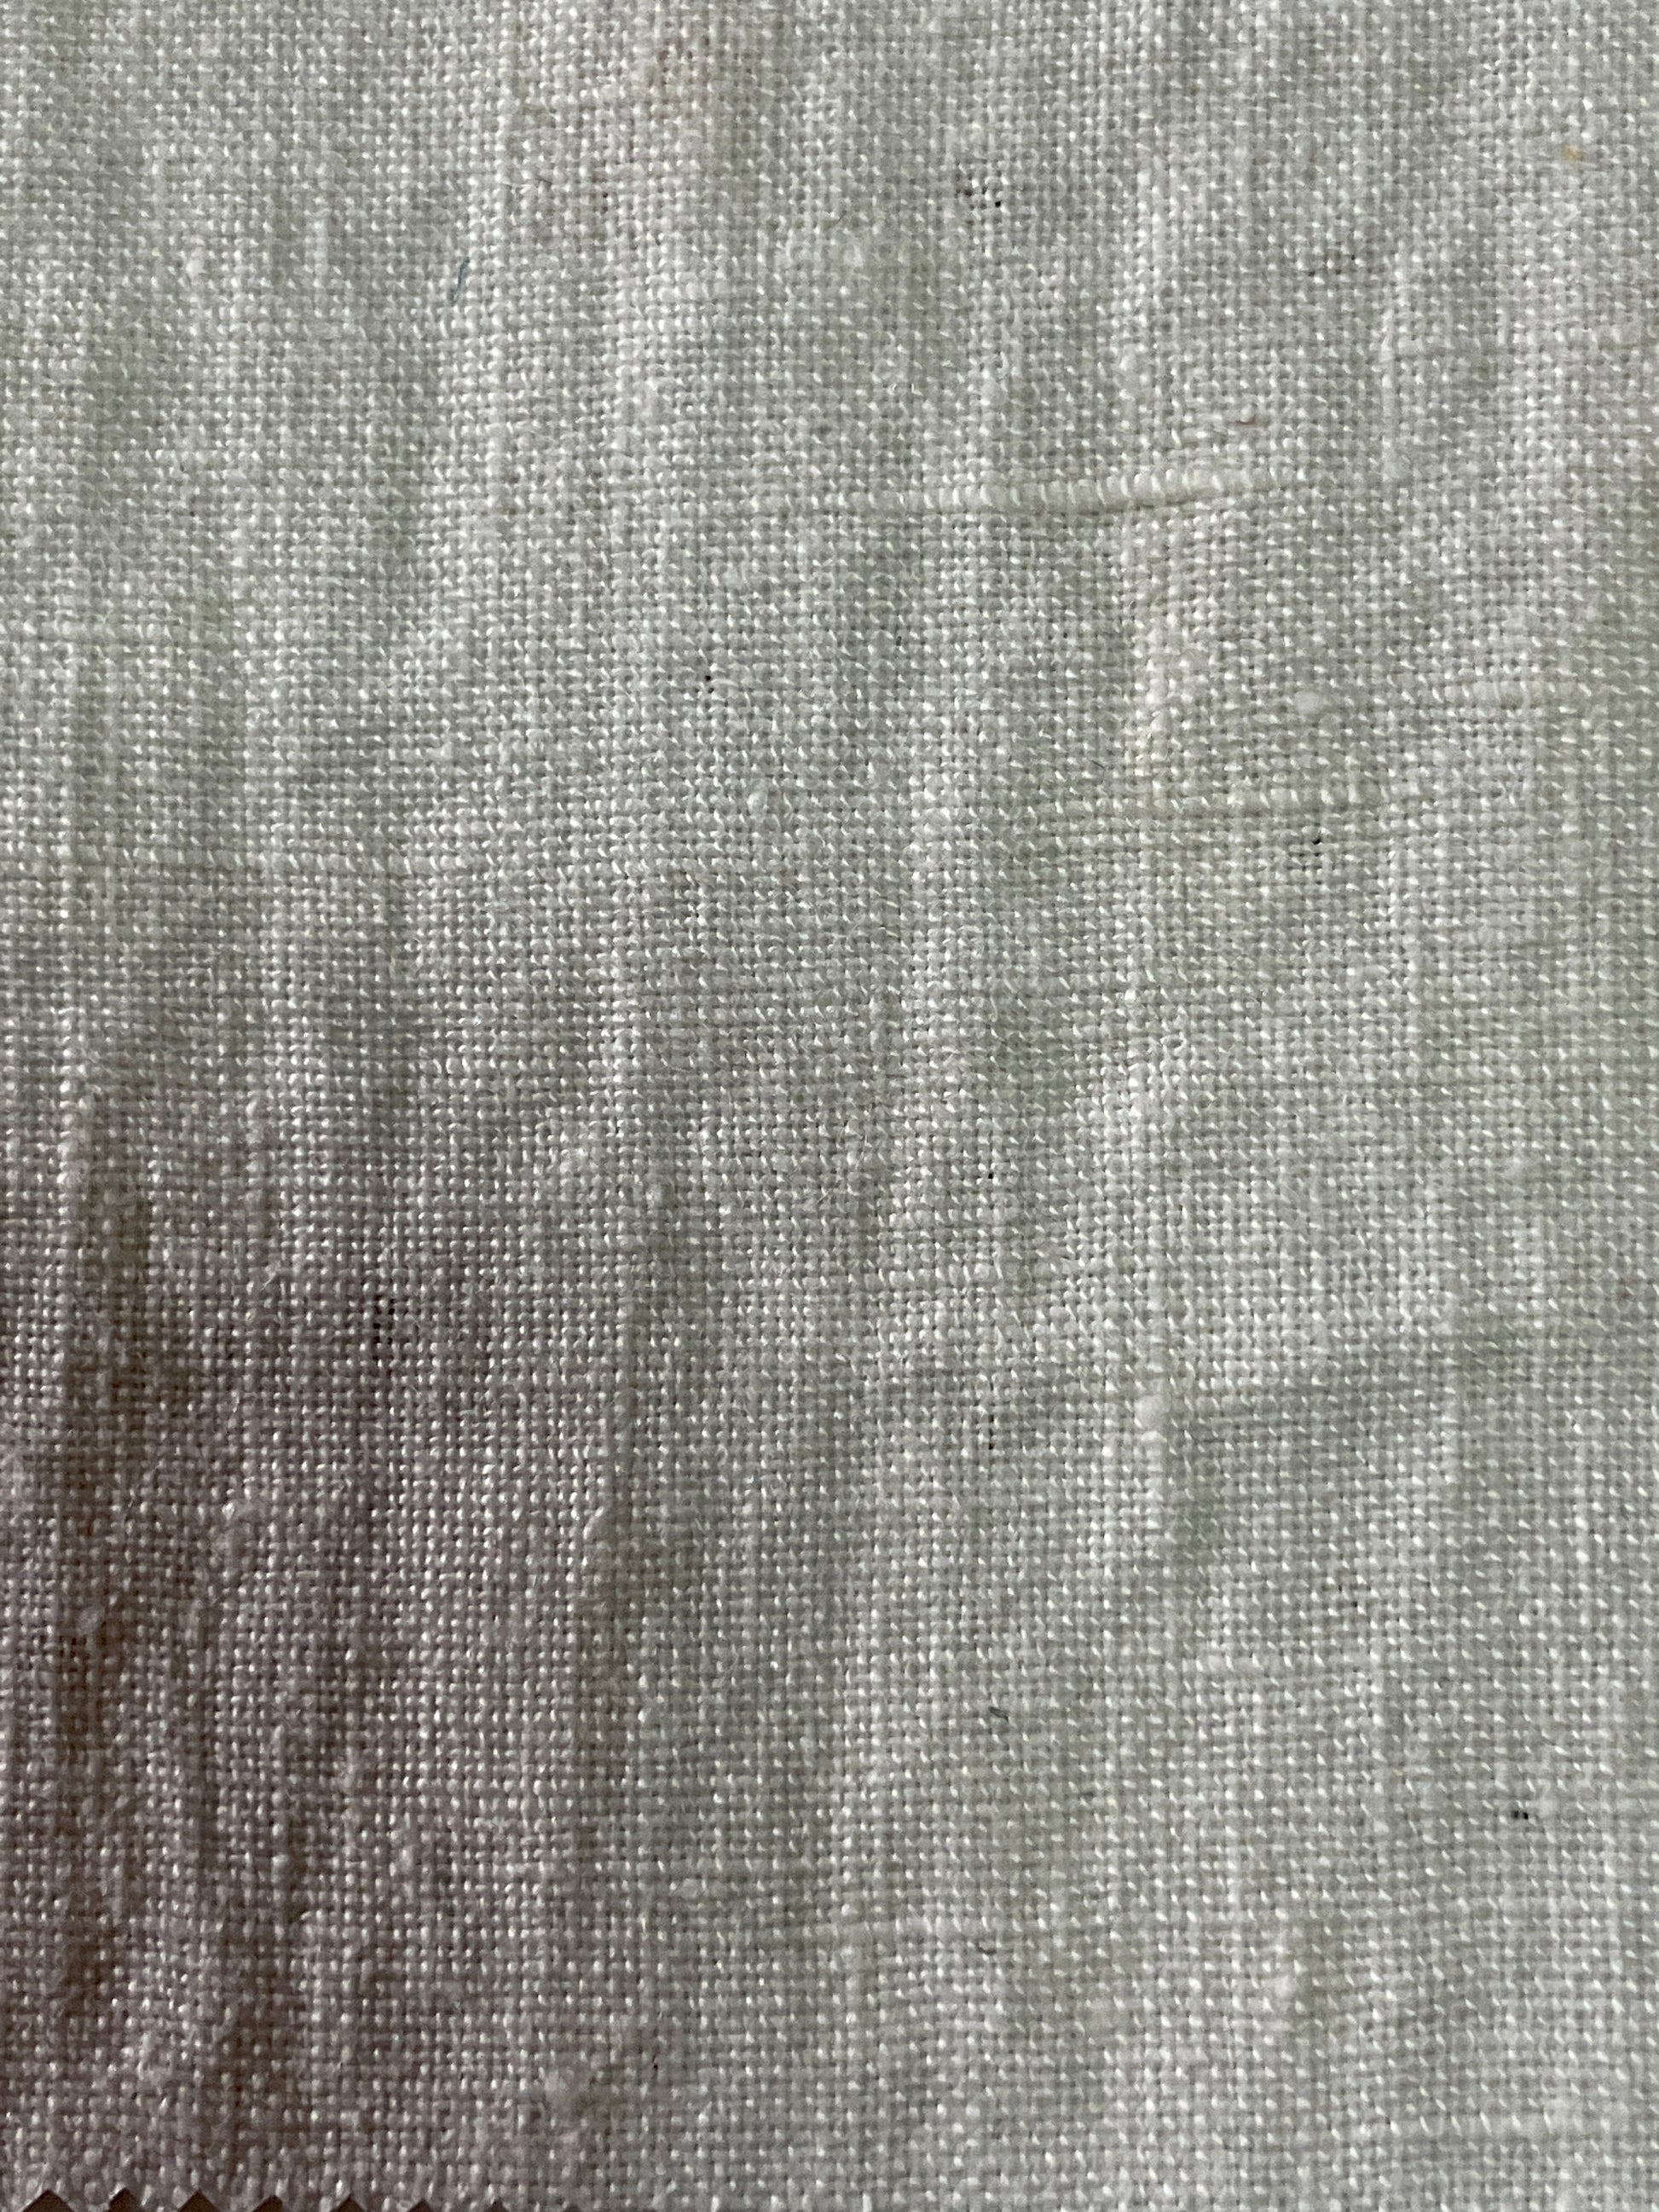 210g Sand Washed Linen fabric - Natasha Fabric